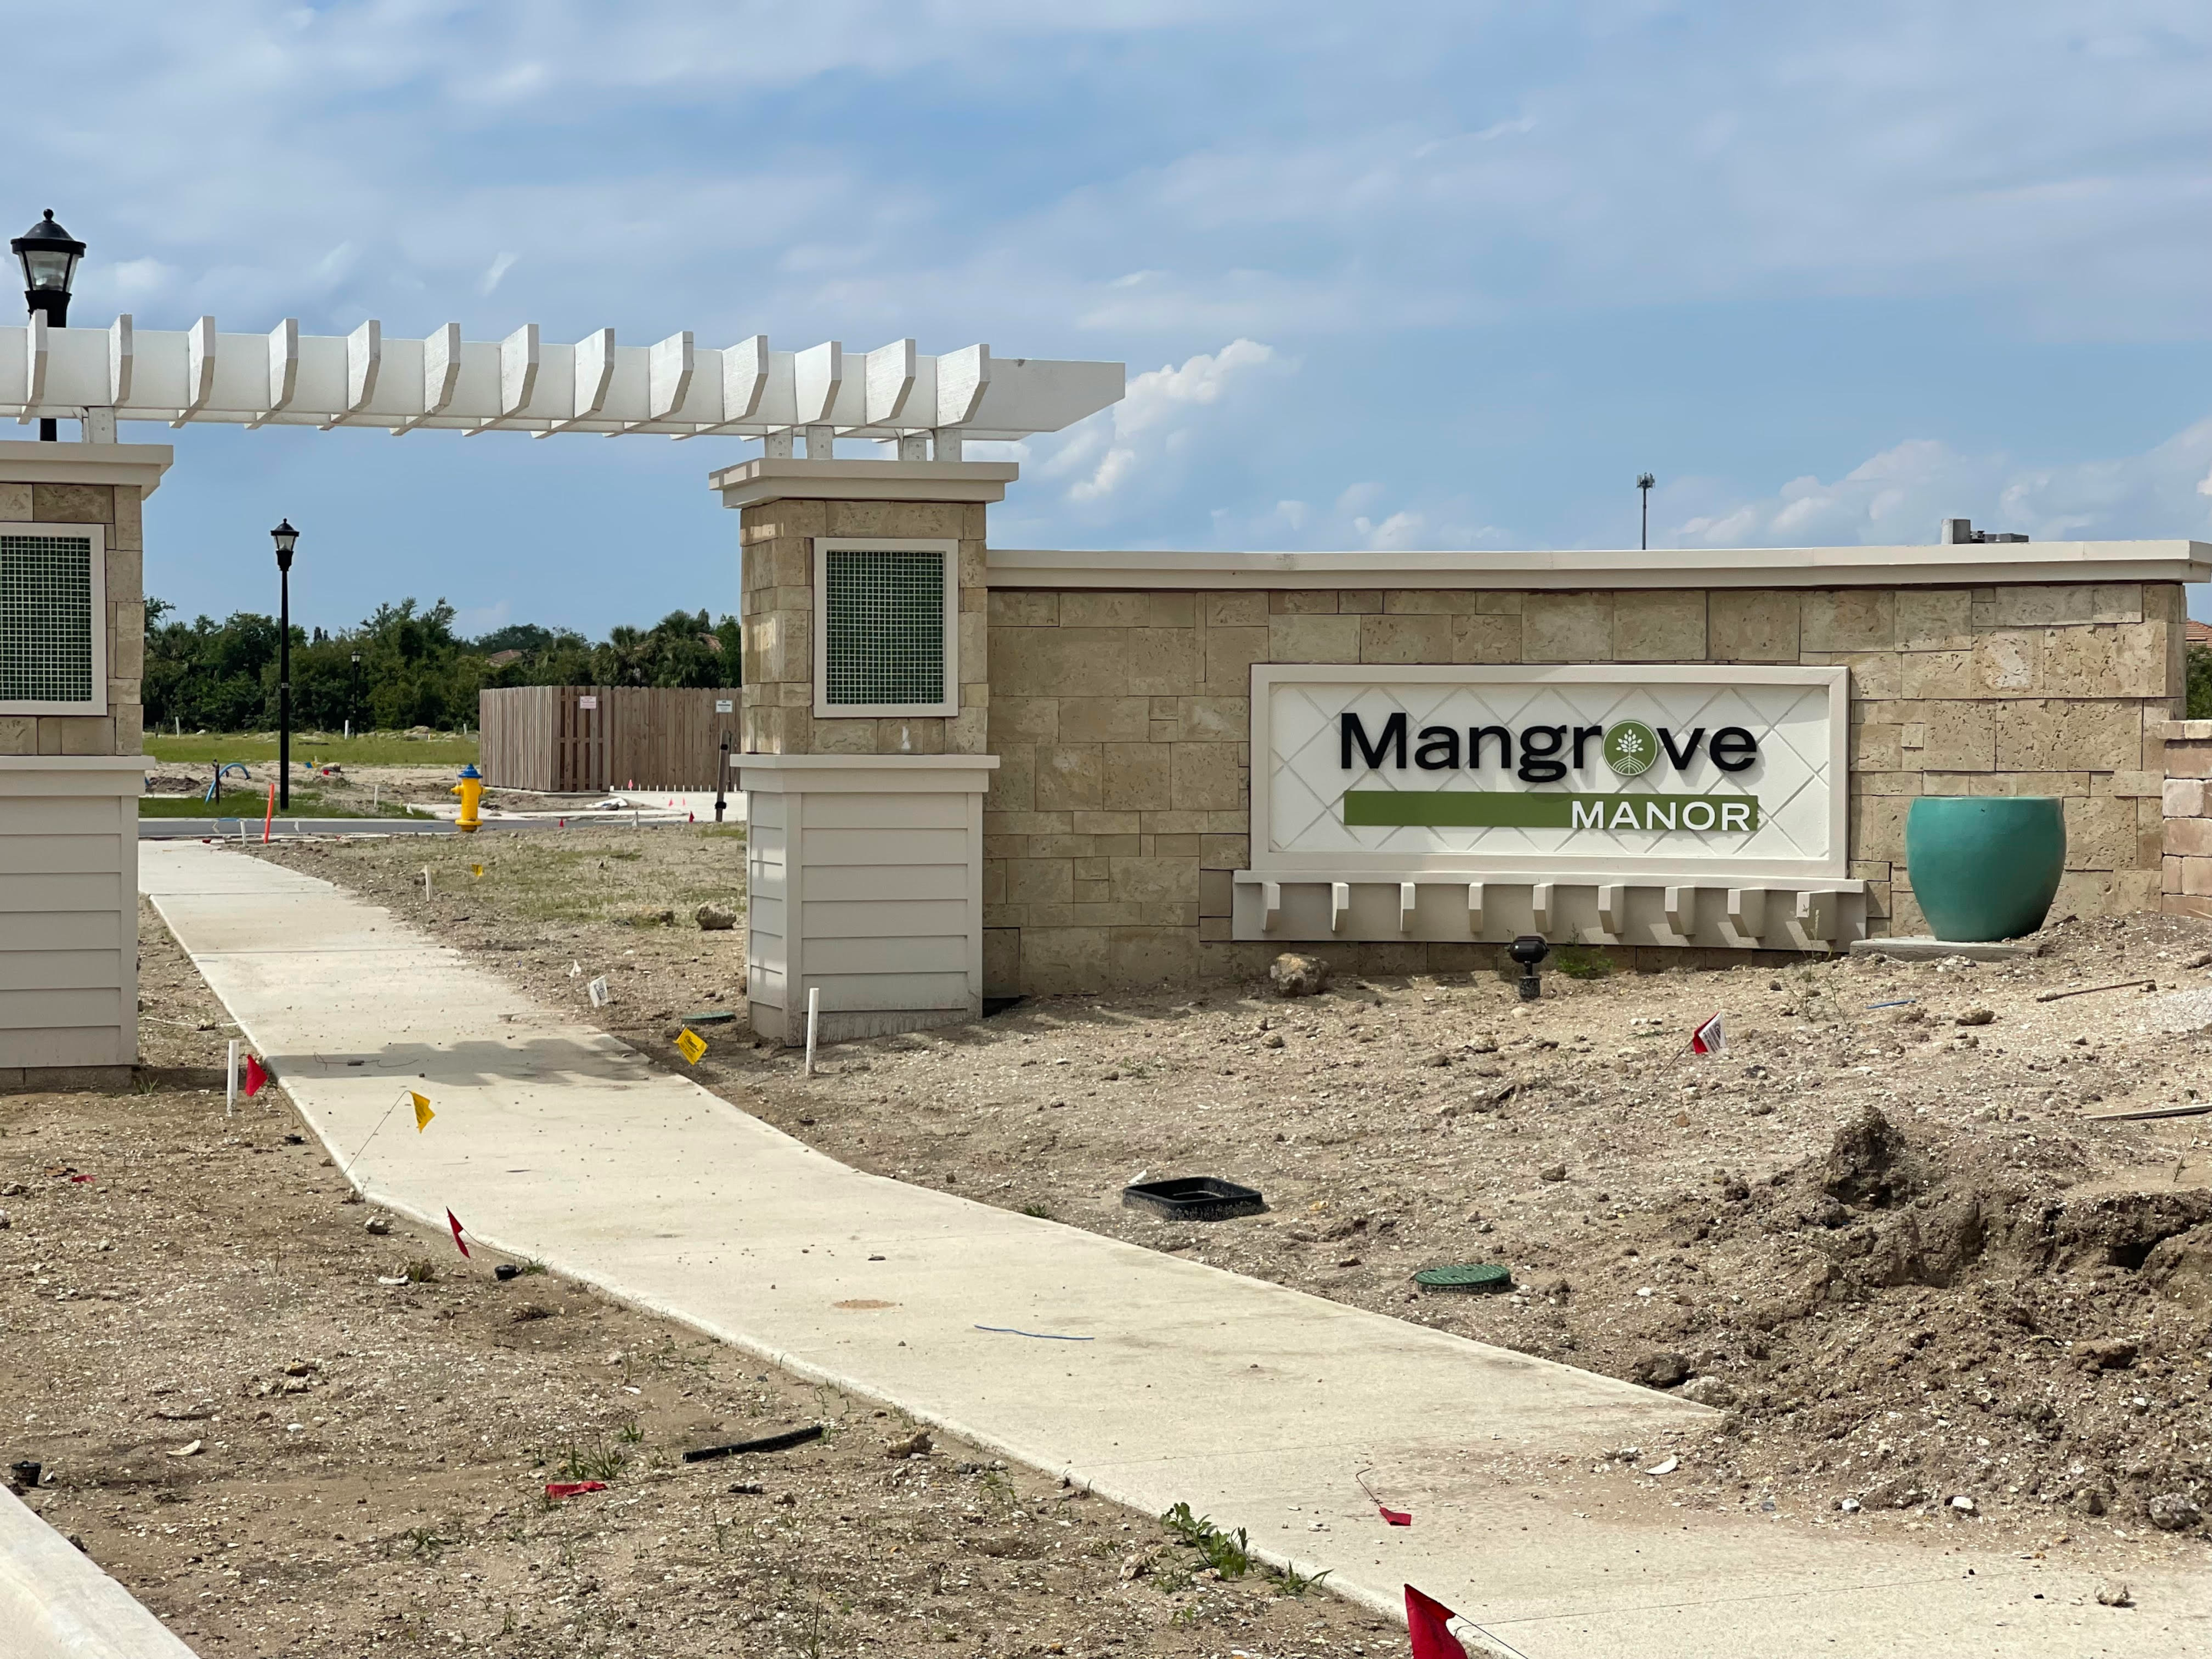 Mangrove Manor, Apollo Beach Fl, DR Horton Homes New Construction Homes for Sale